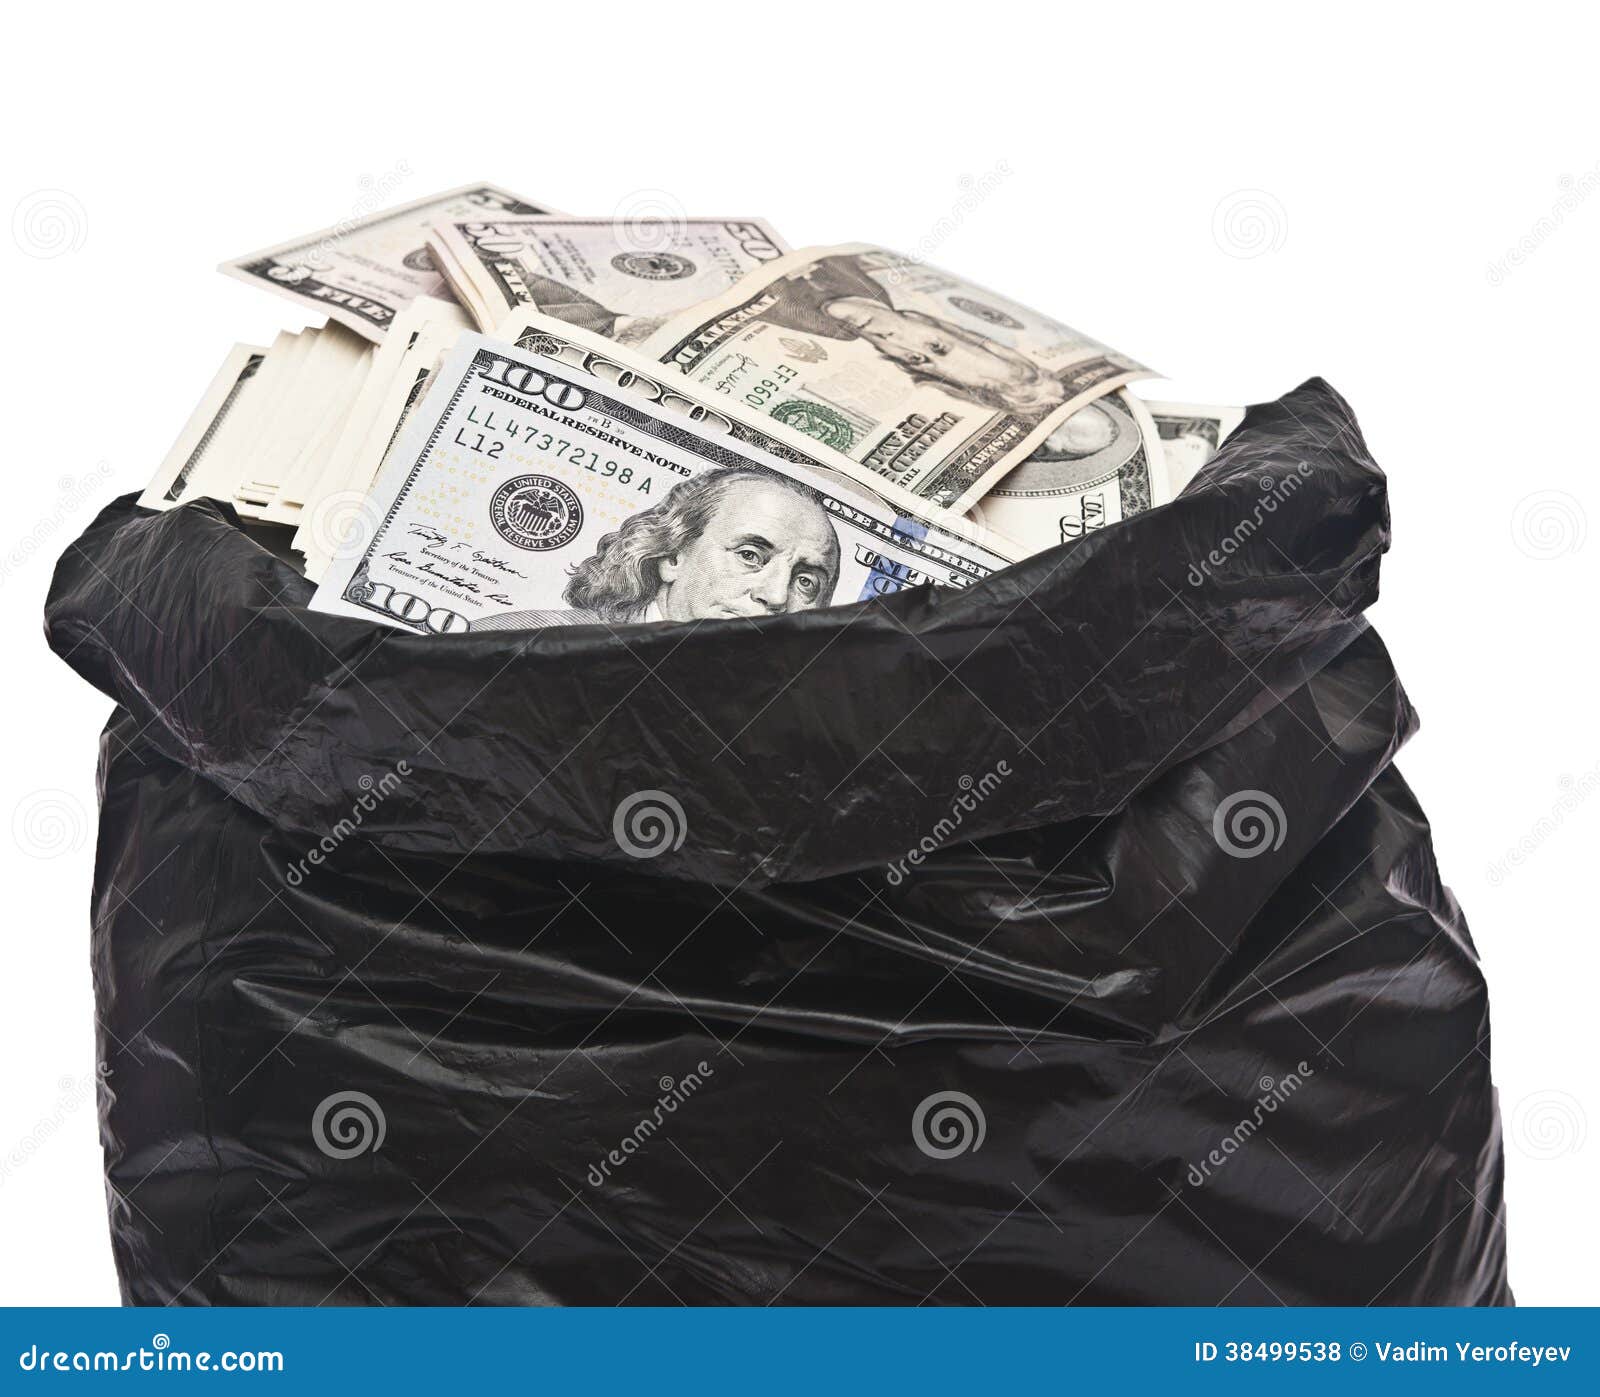 Plastic bag full of money stock photo. Image of dollar - 38499538